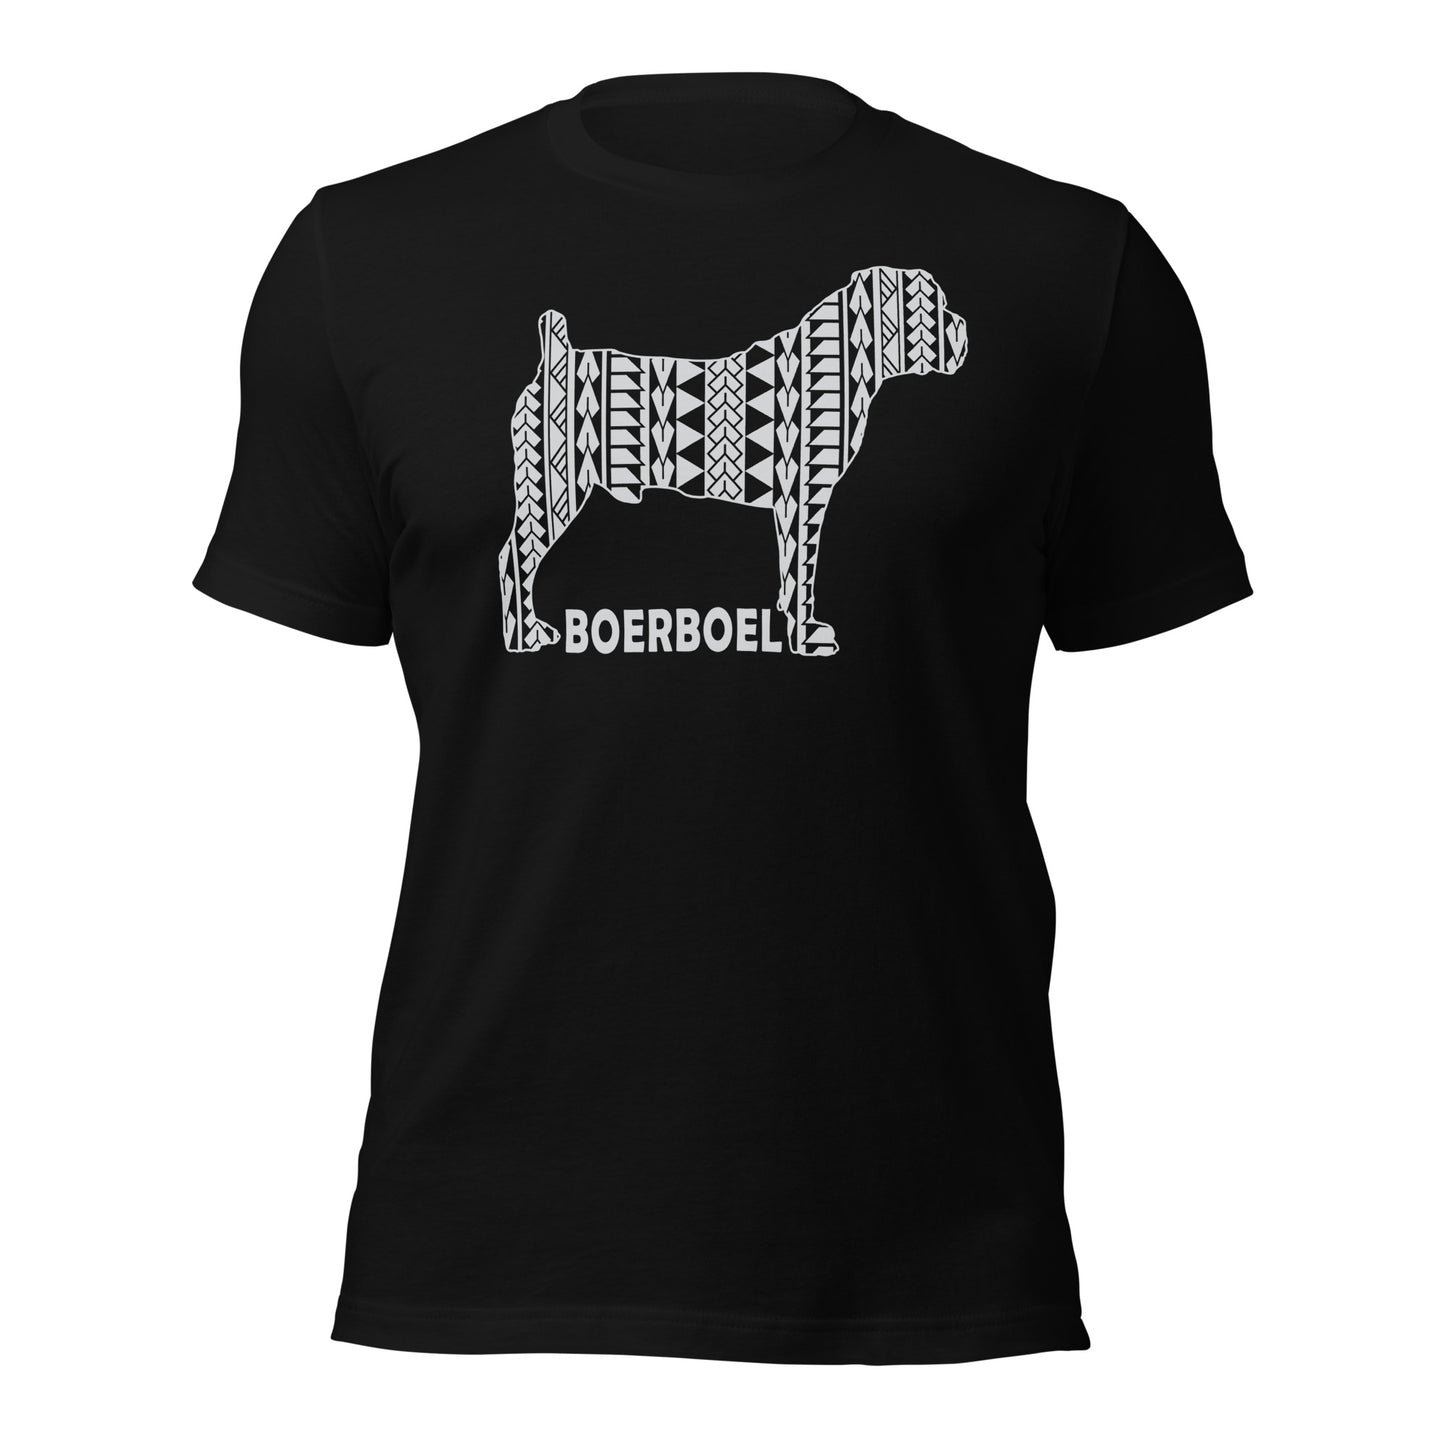 Boerboel Polynesian t-shirt black by Dog Artistry.